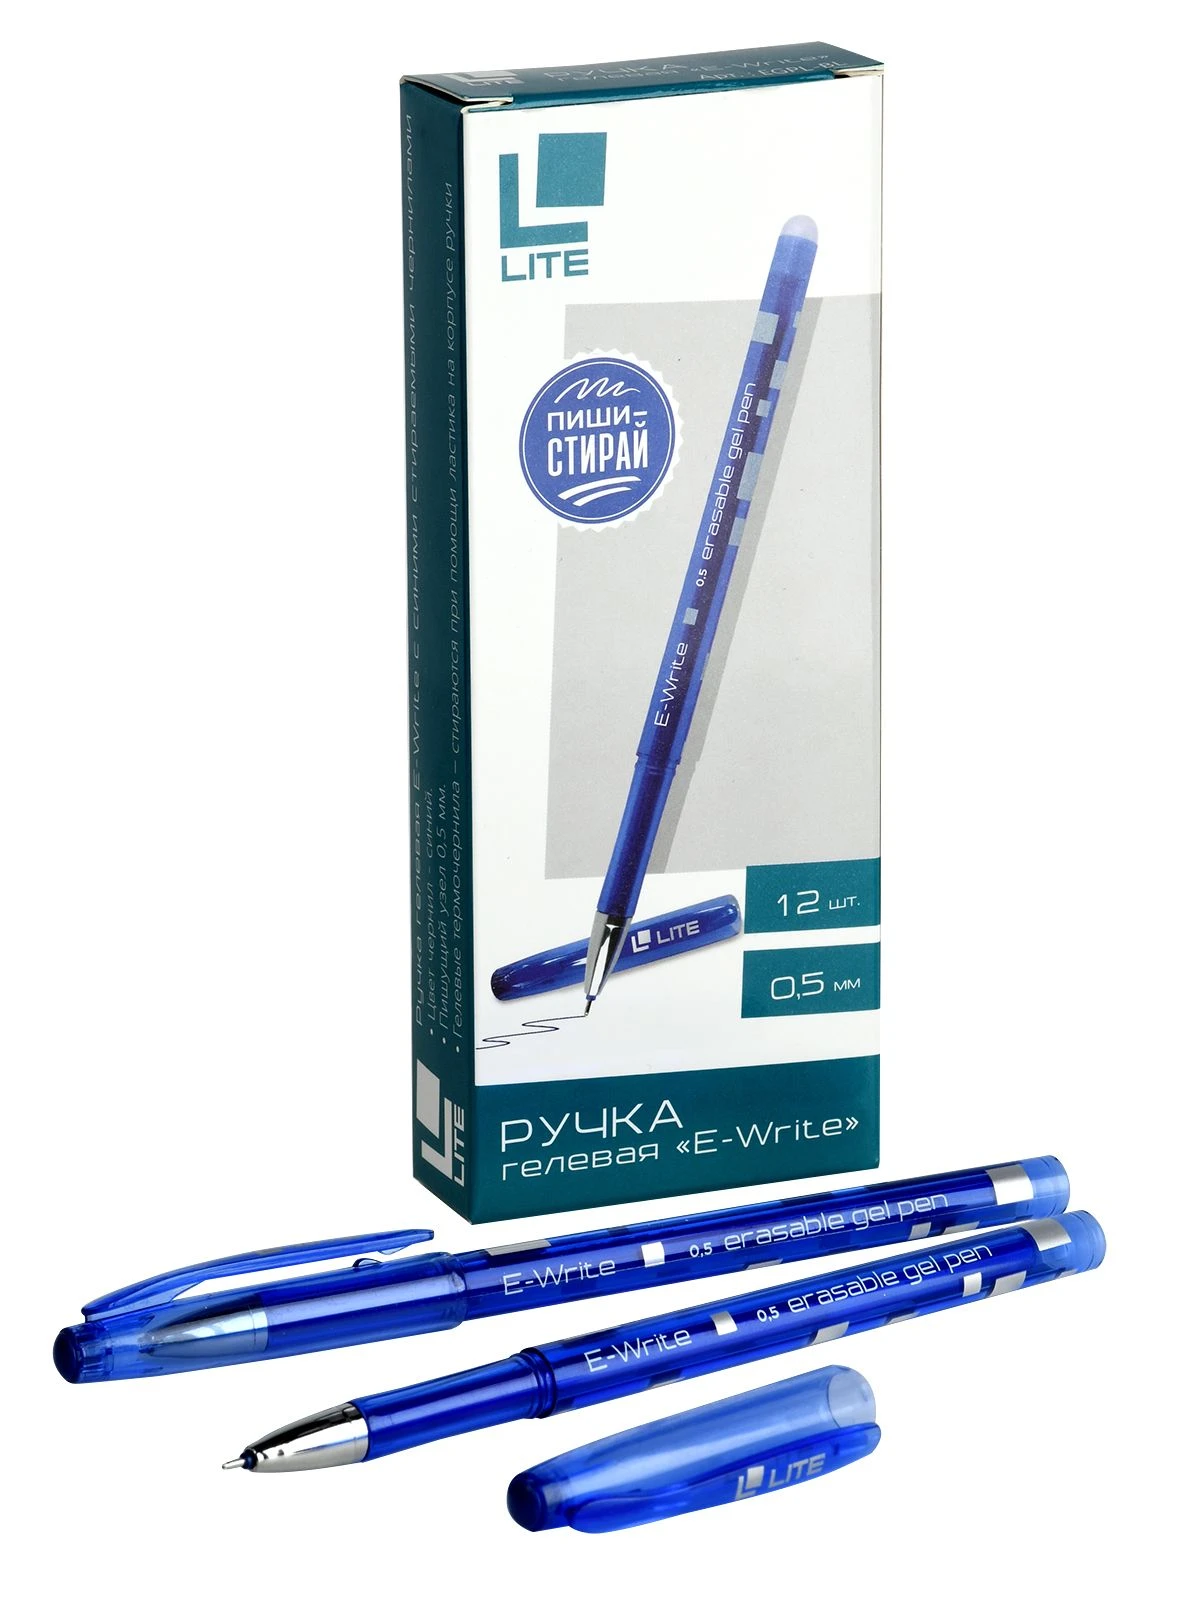 Ручка гелевая LITE E-WRITE 0,5 мм., синий пиши-стирай